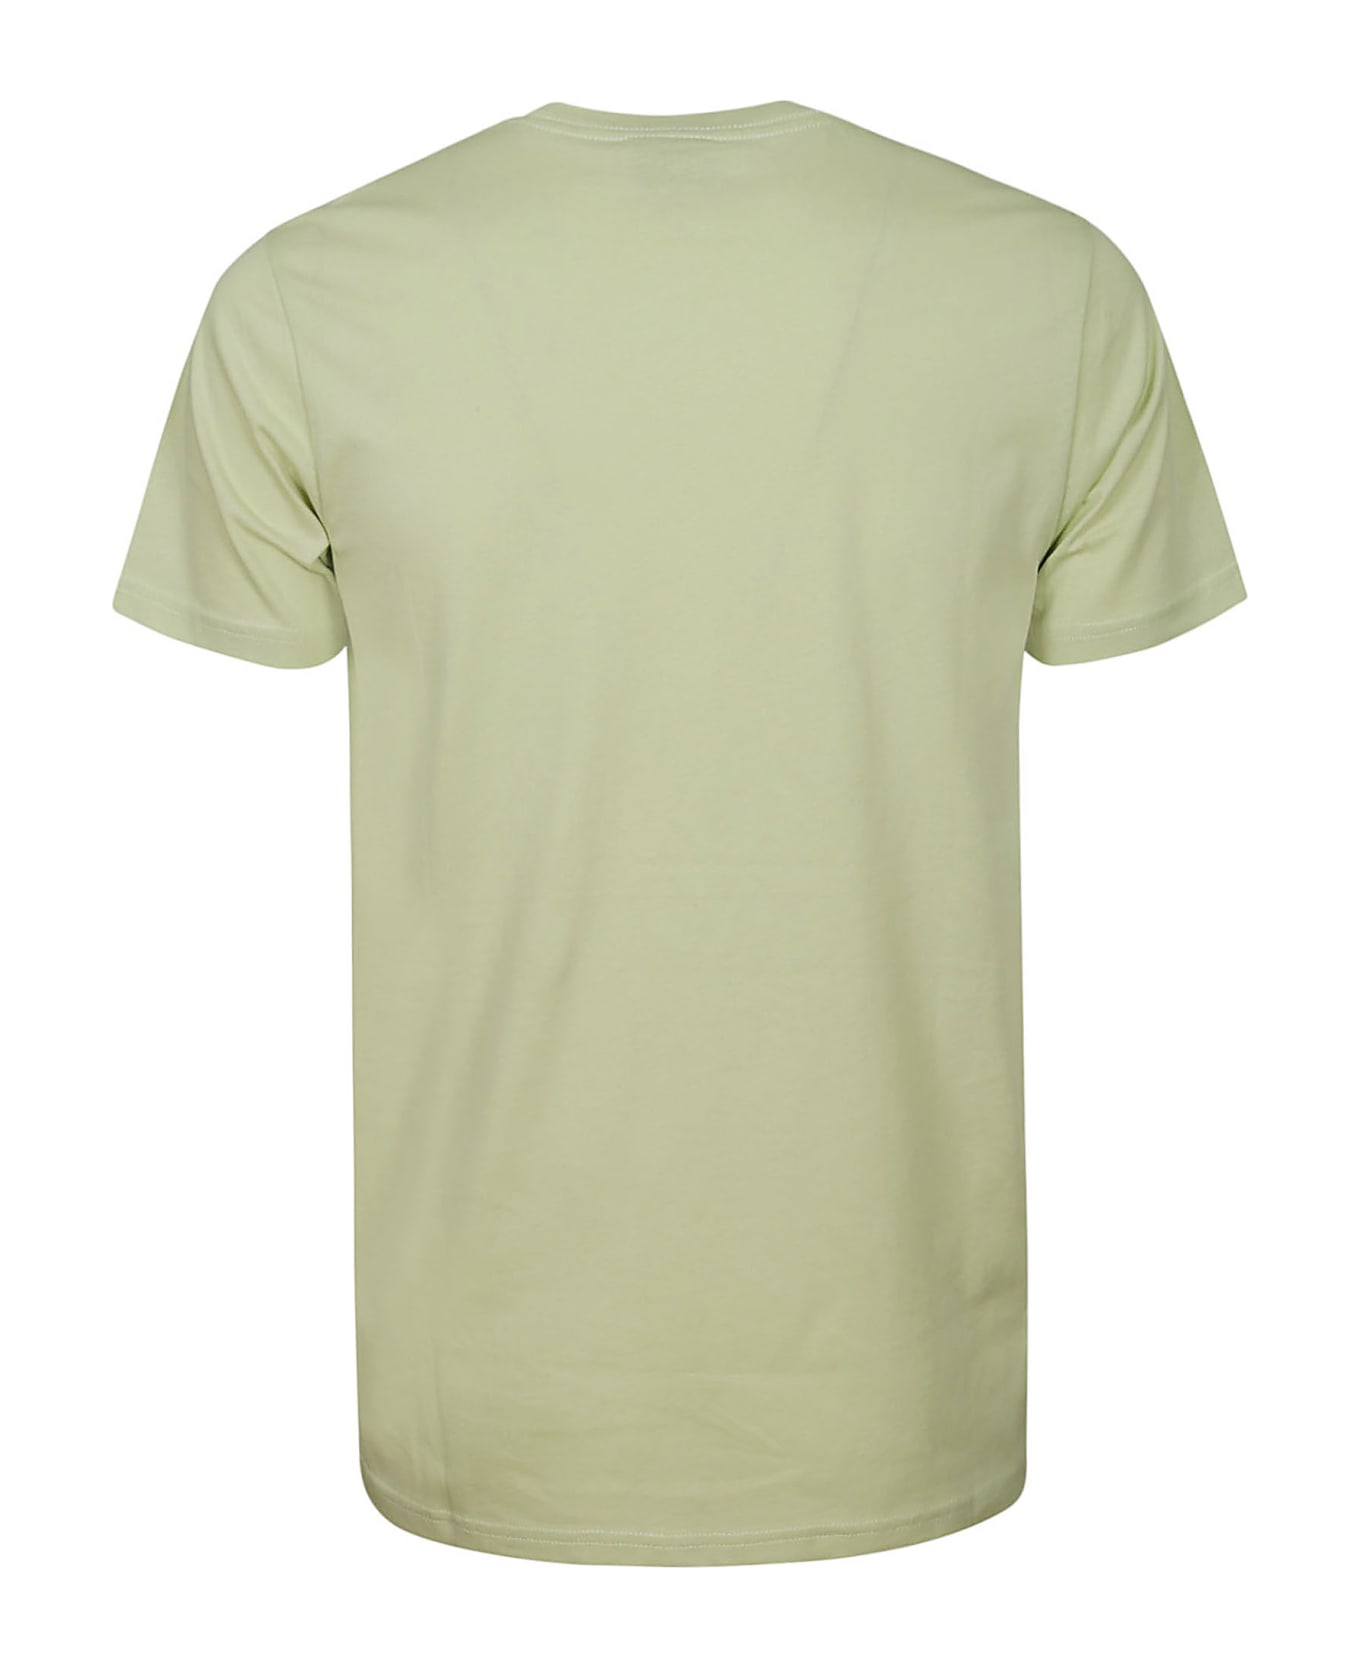 Paul Smith Slim Fit T-shirt B&w Zebra - B Green